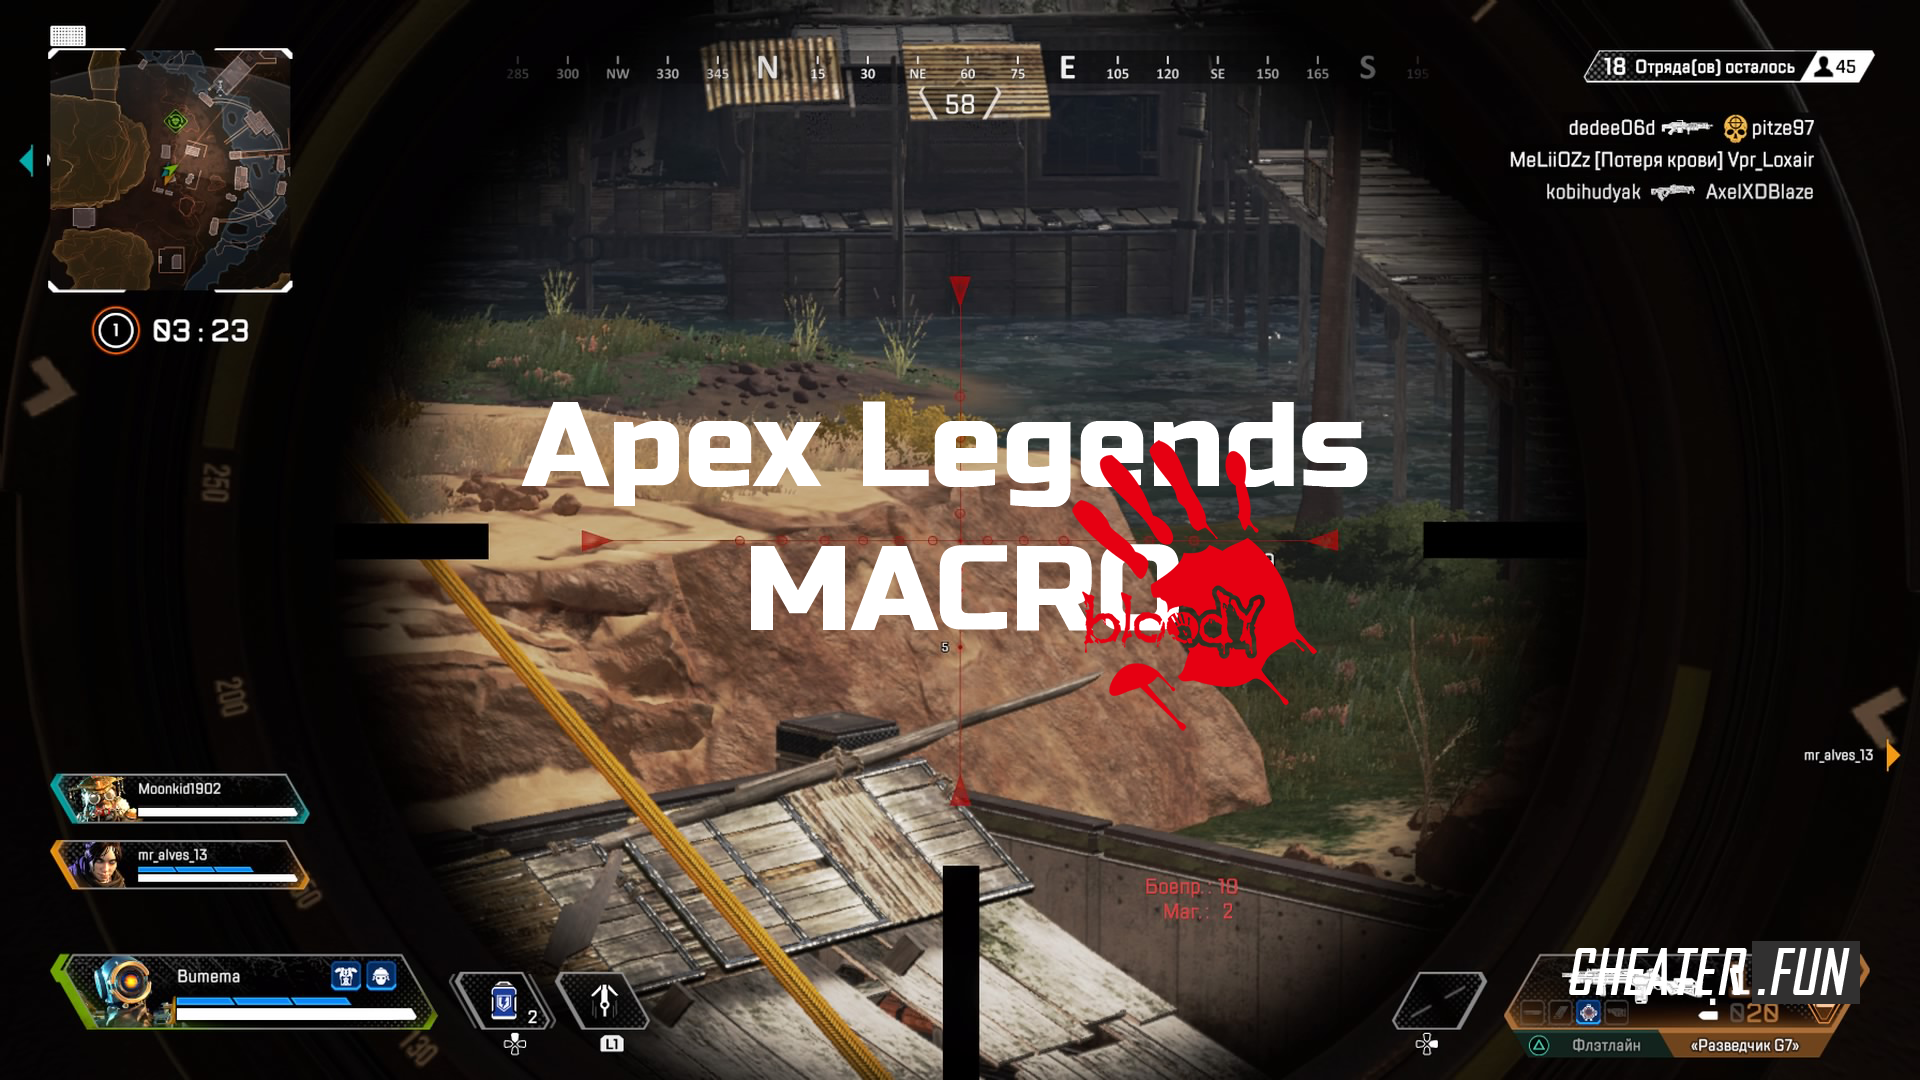 Apex legends macros allowed